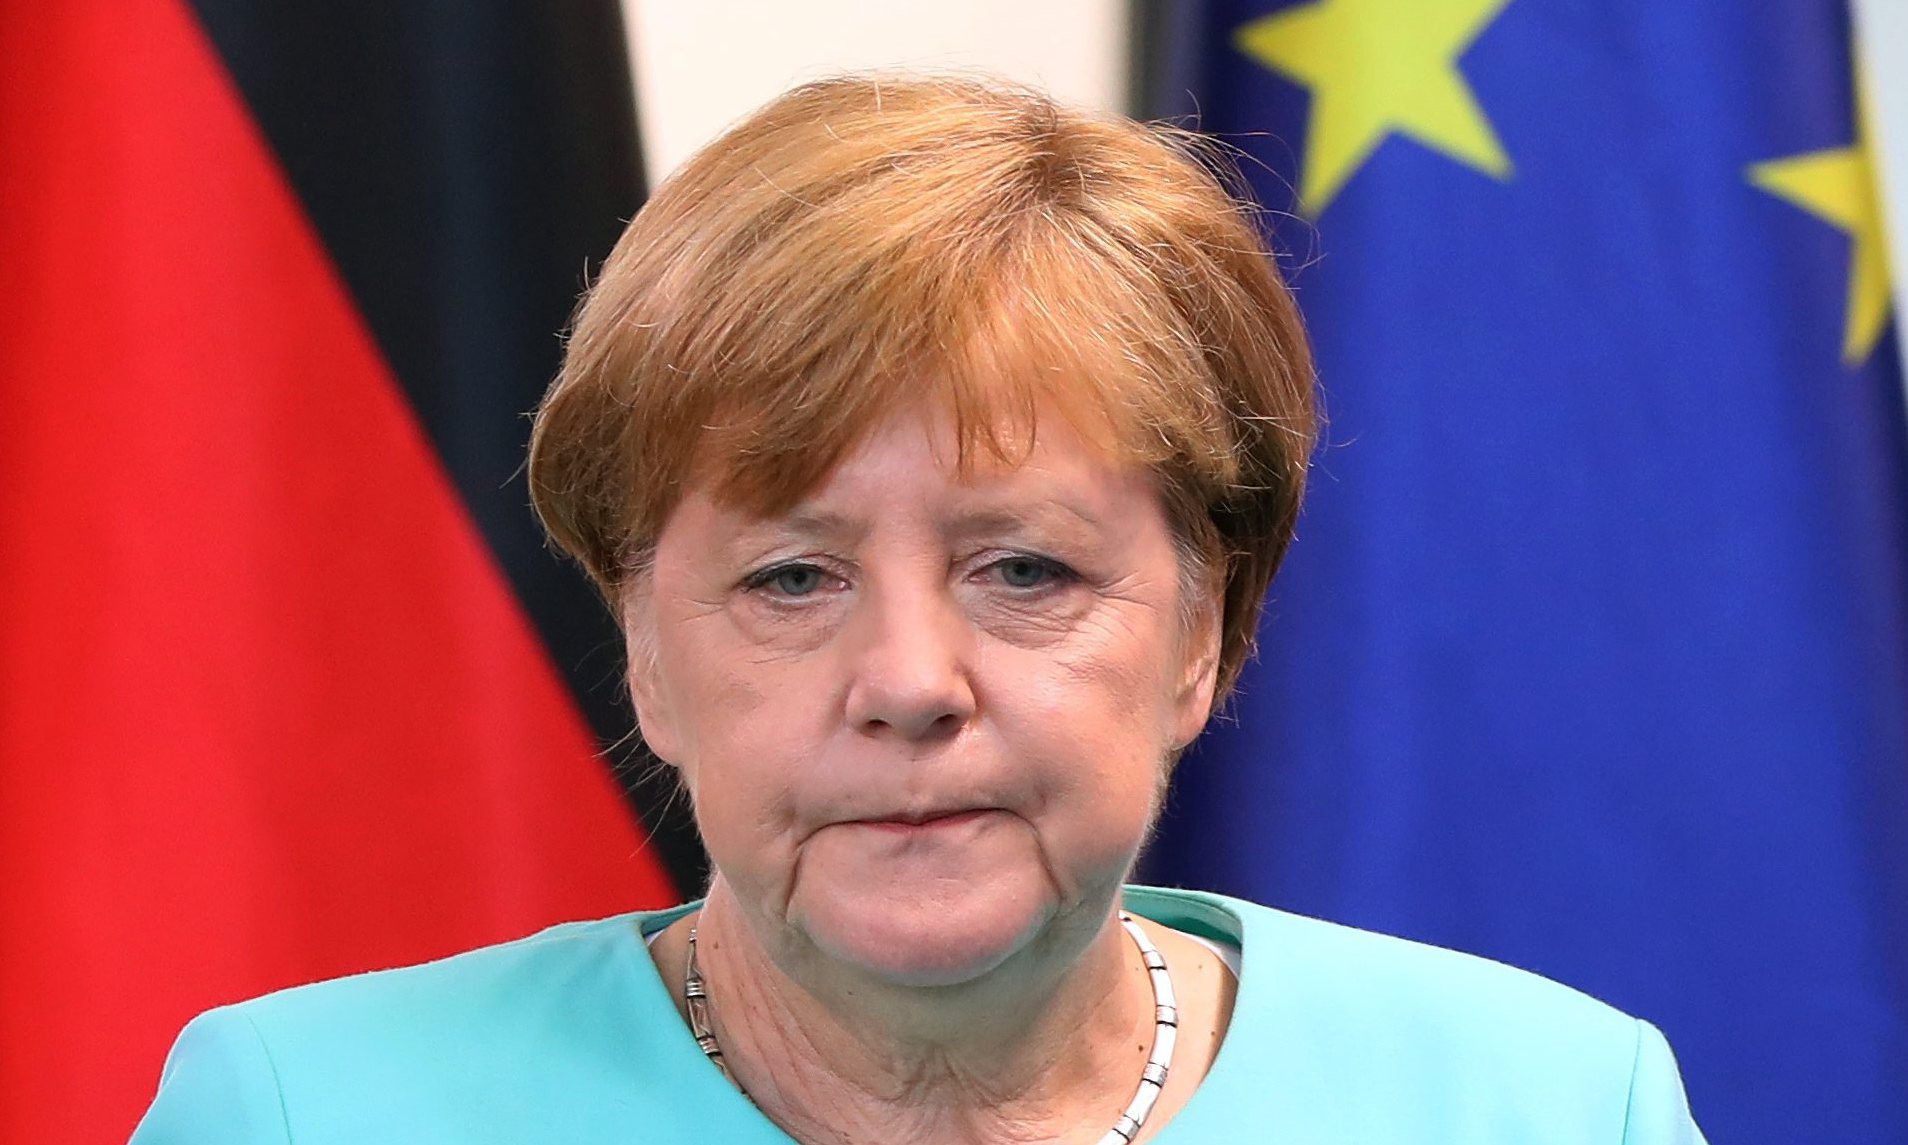 Ms Merkel has led Germany since 2005. Photograph: Kay Nietfeld/EPA